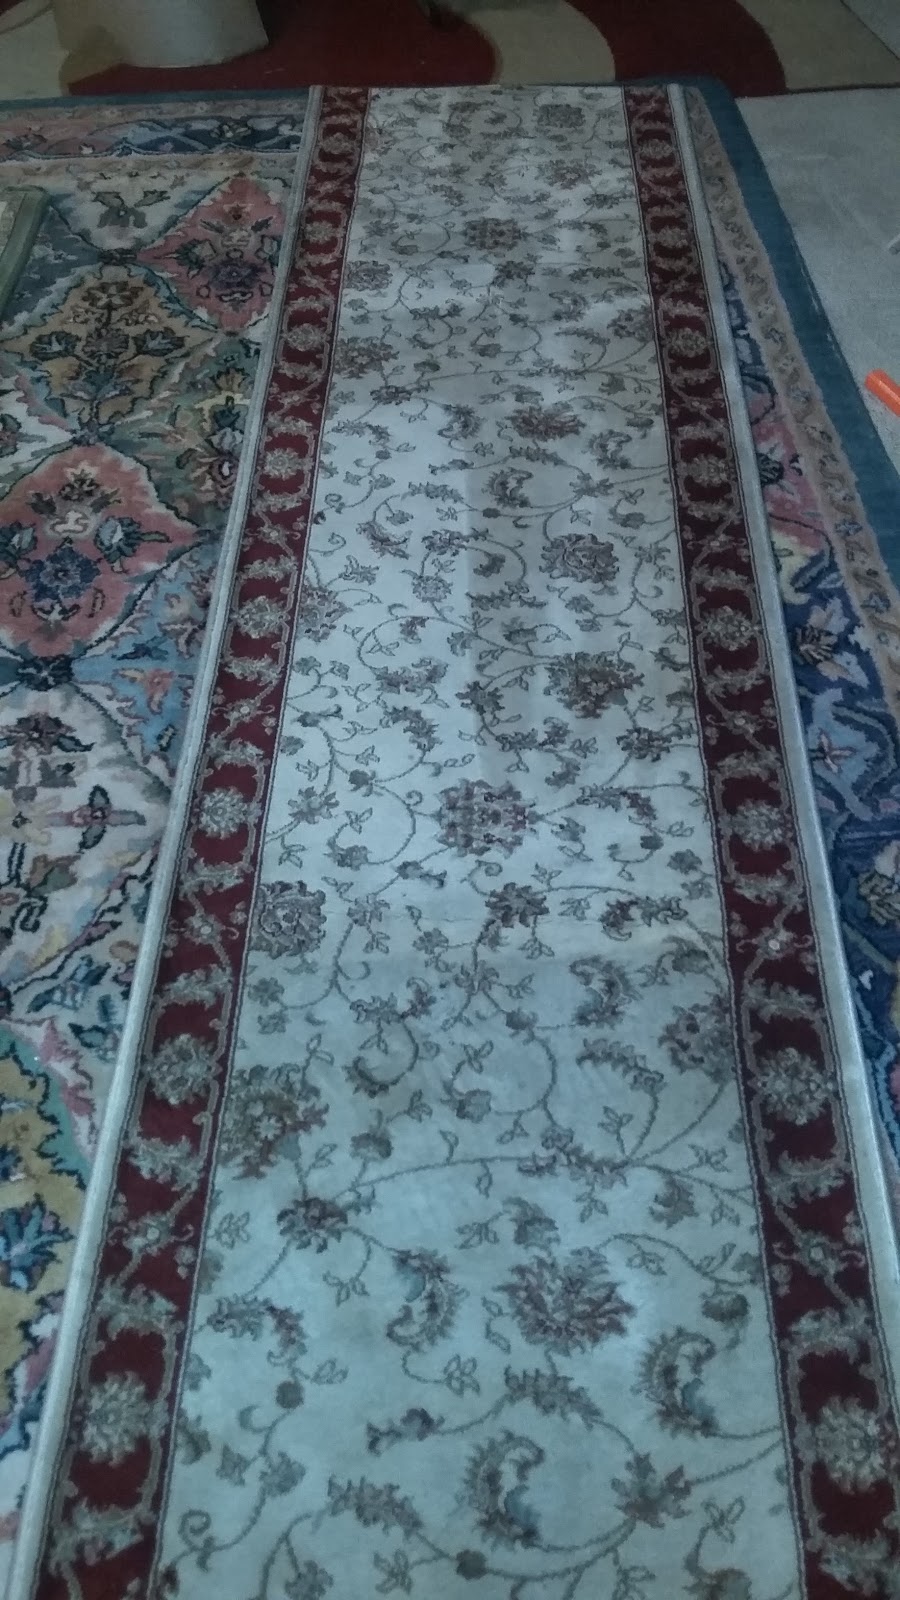 Alexs Magic Carpet Cleaning | 1784 5th Ave C, Bay Shore, NY 11706 | Phone: (631) 431-7327